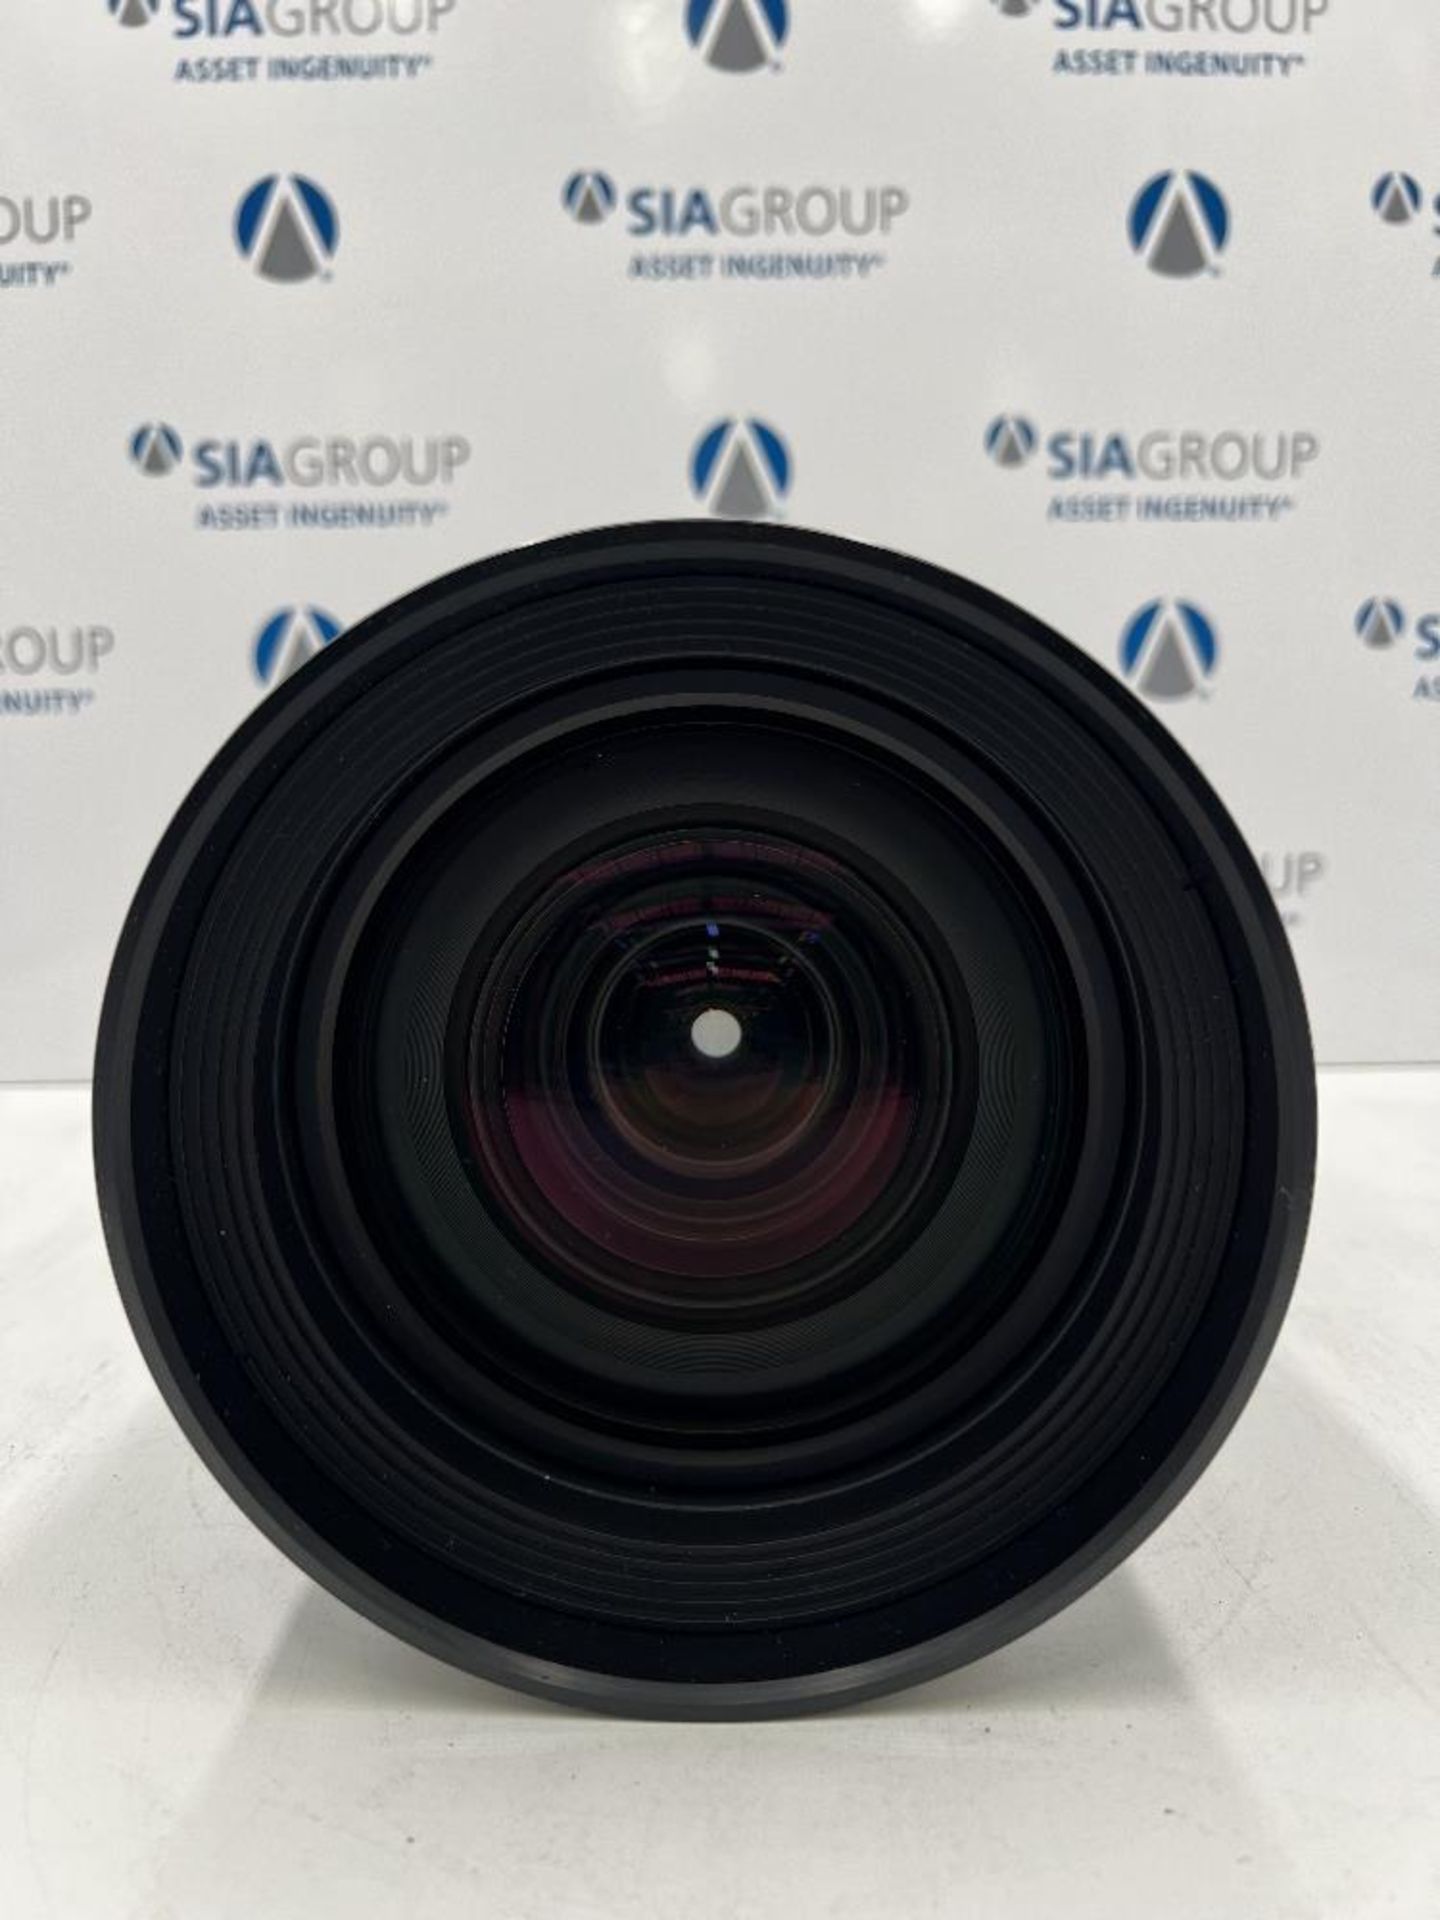 Panasonic ET-D75LE6 0.9-1.1 Zoom Lens With Carrier Case - Image 4 of 8